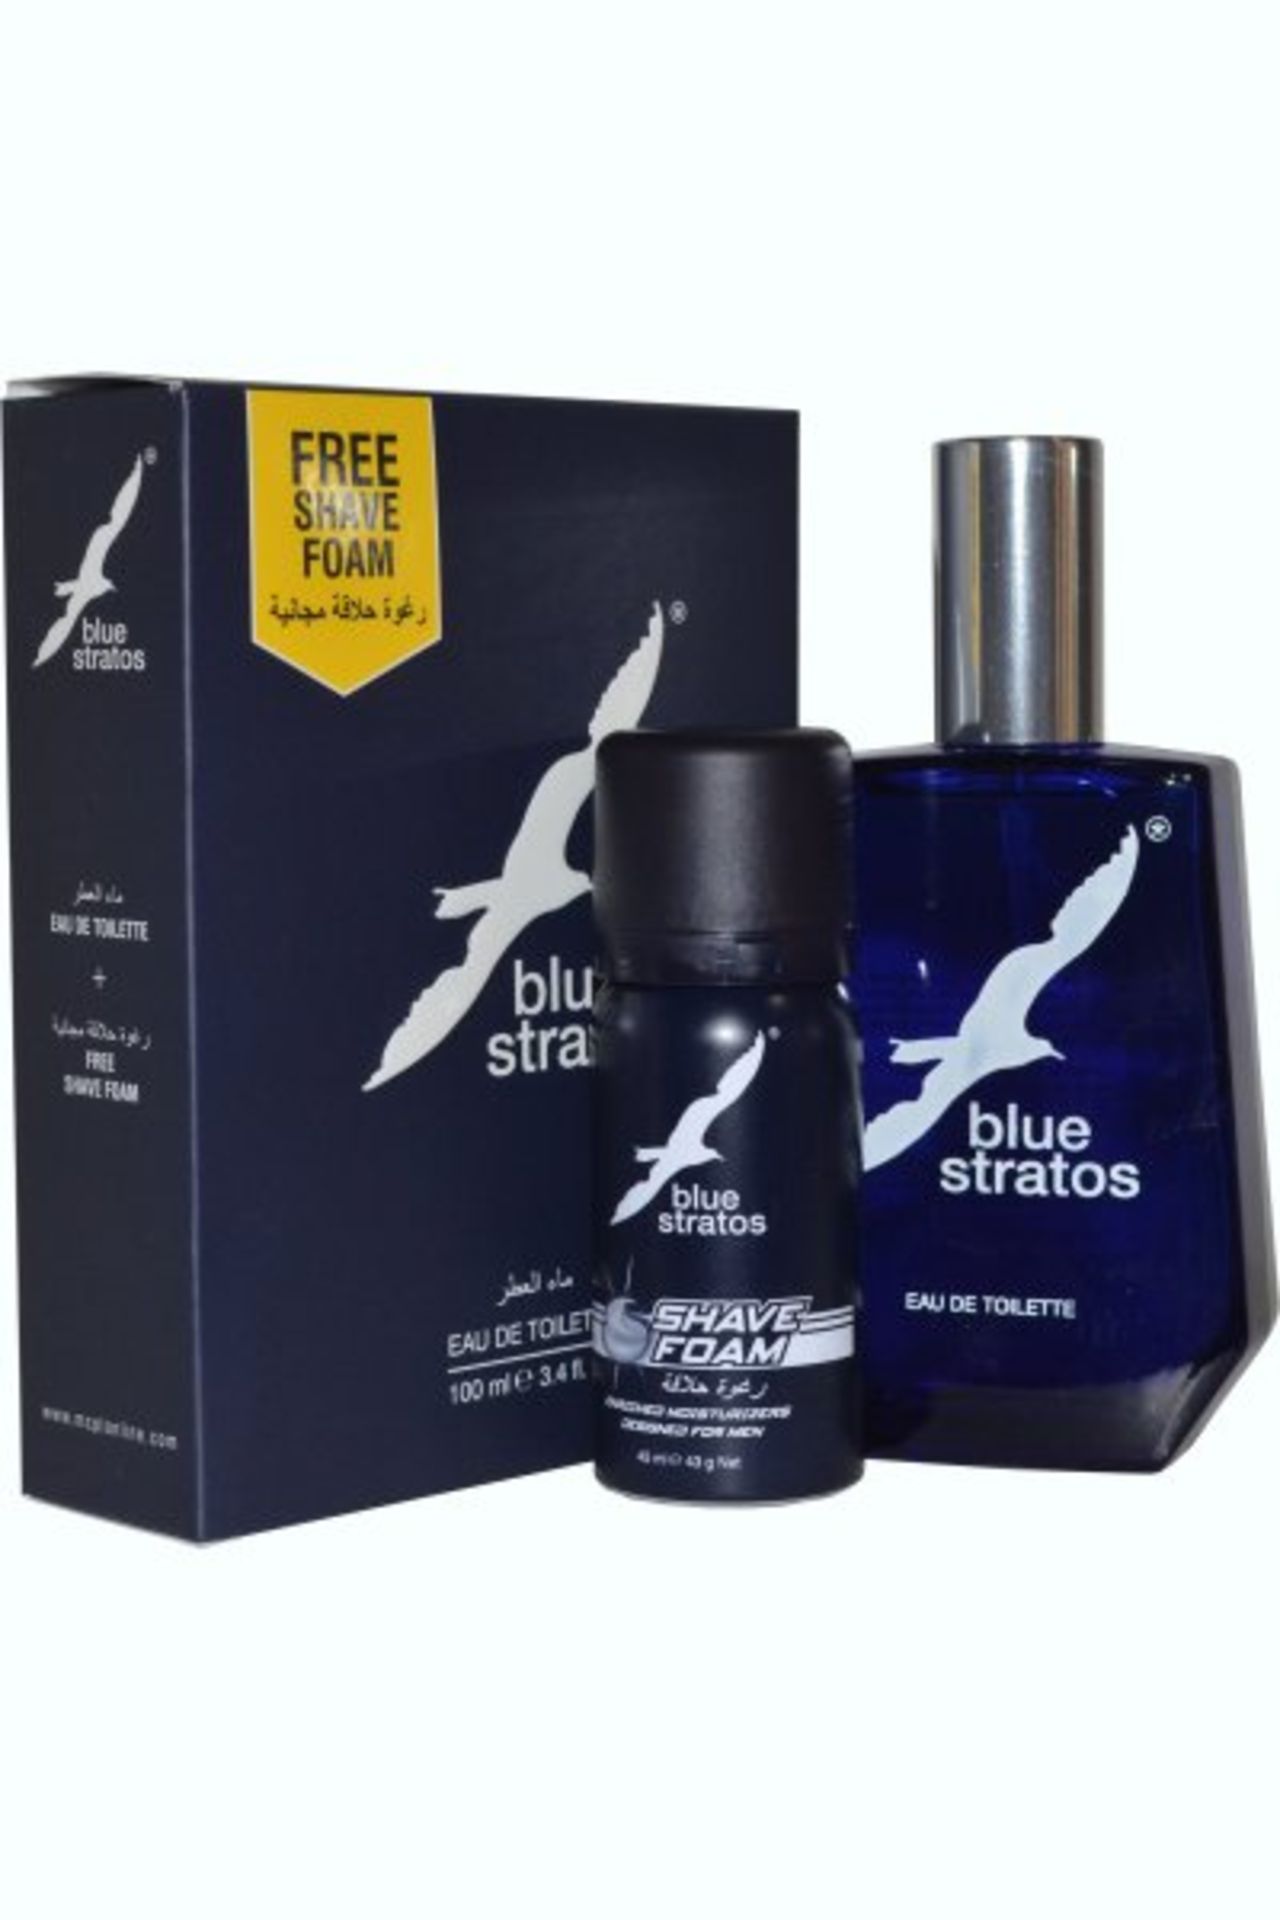 V Brand New Blue Stratos 100ml Eau De Toilette + 45ml Shave Foam X 2 YOUR BID PRICE TO BE MULTIPLIED